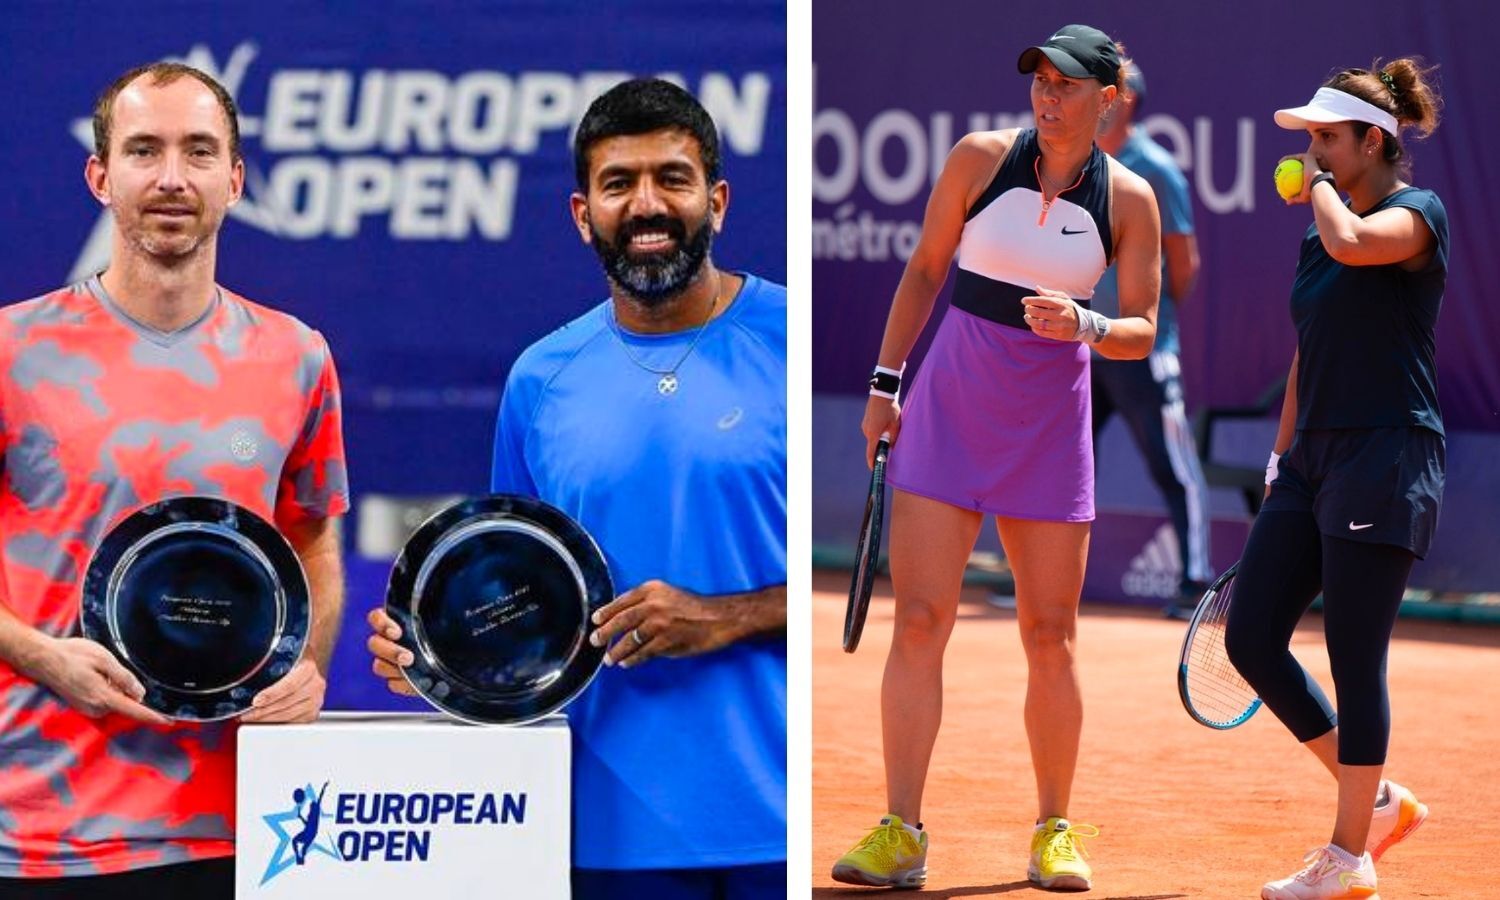 French Open 2022 Sania Mirza, Rohan Bopanna, Ramkumar Ramanathan in doubles — Preview, Where to Watch, Live Stream